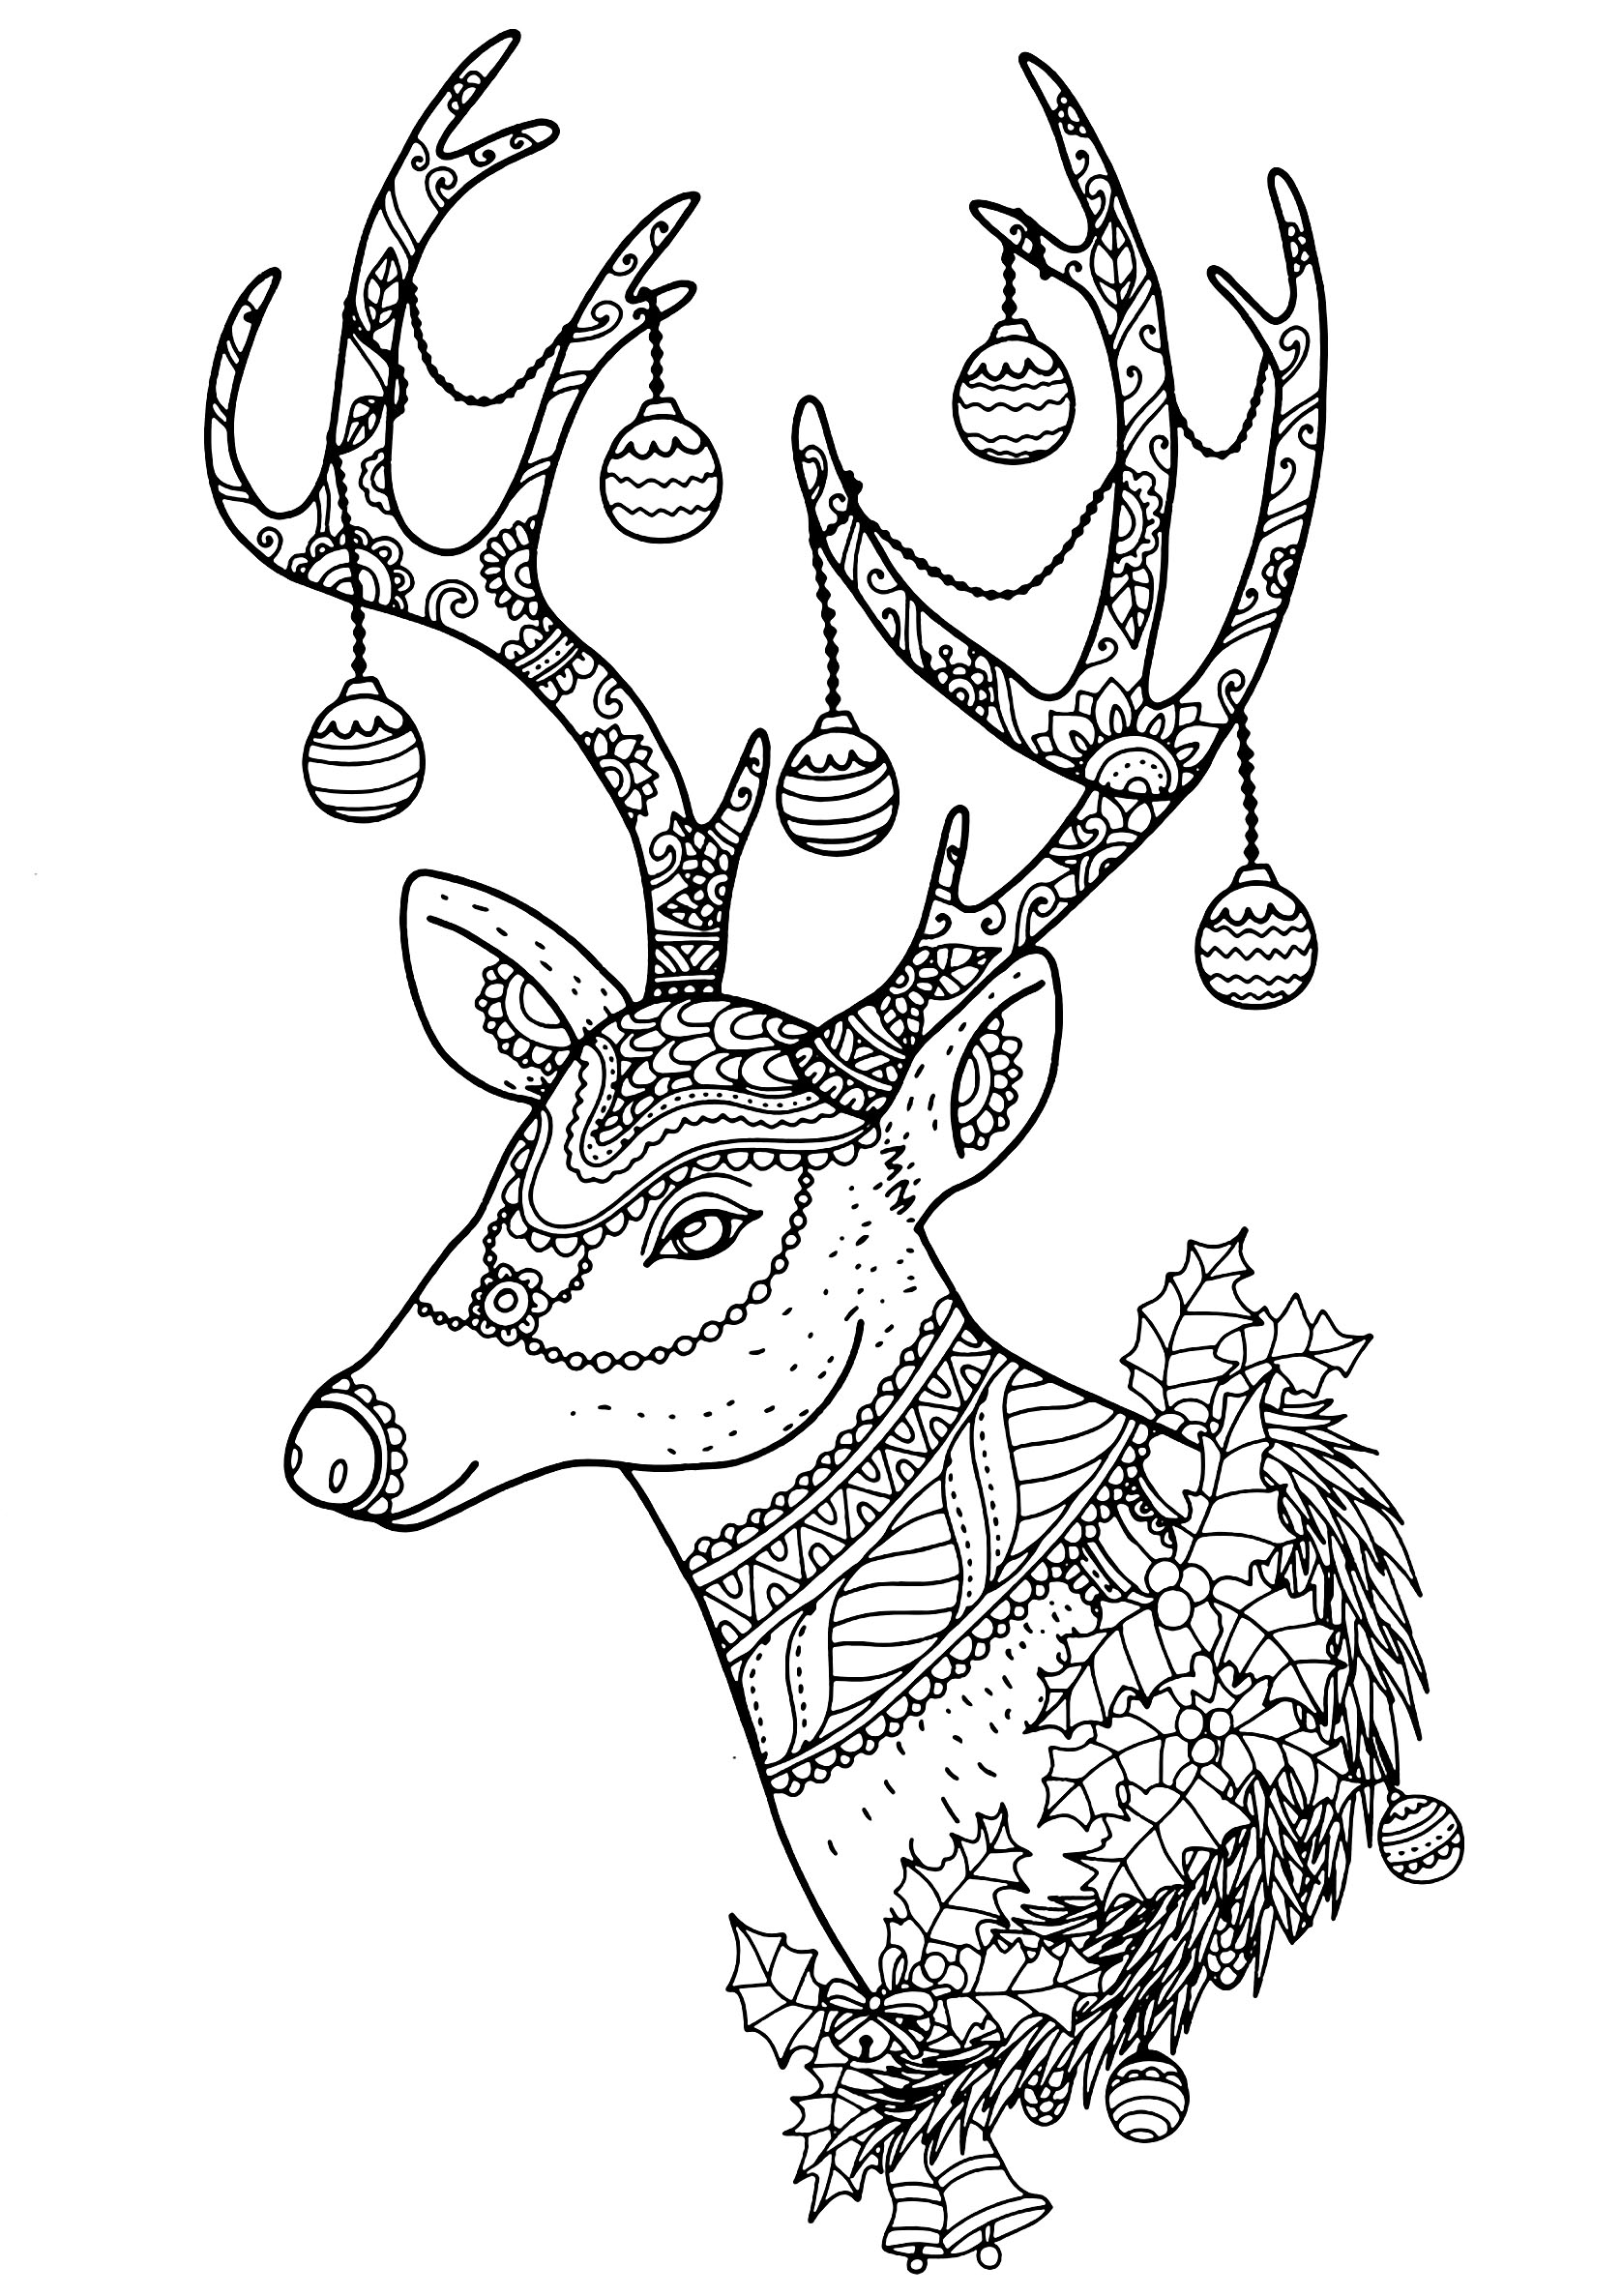 Christmas reindeer nontachai hengtragool ChristmasColoring Pages